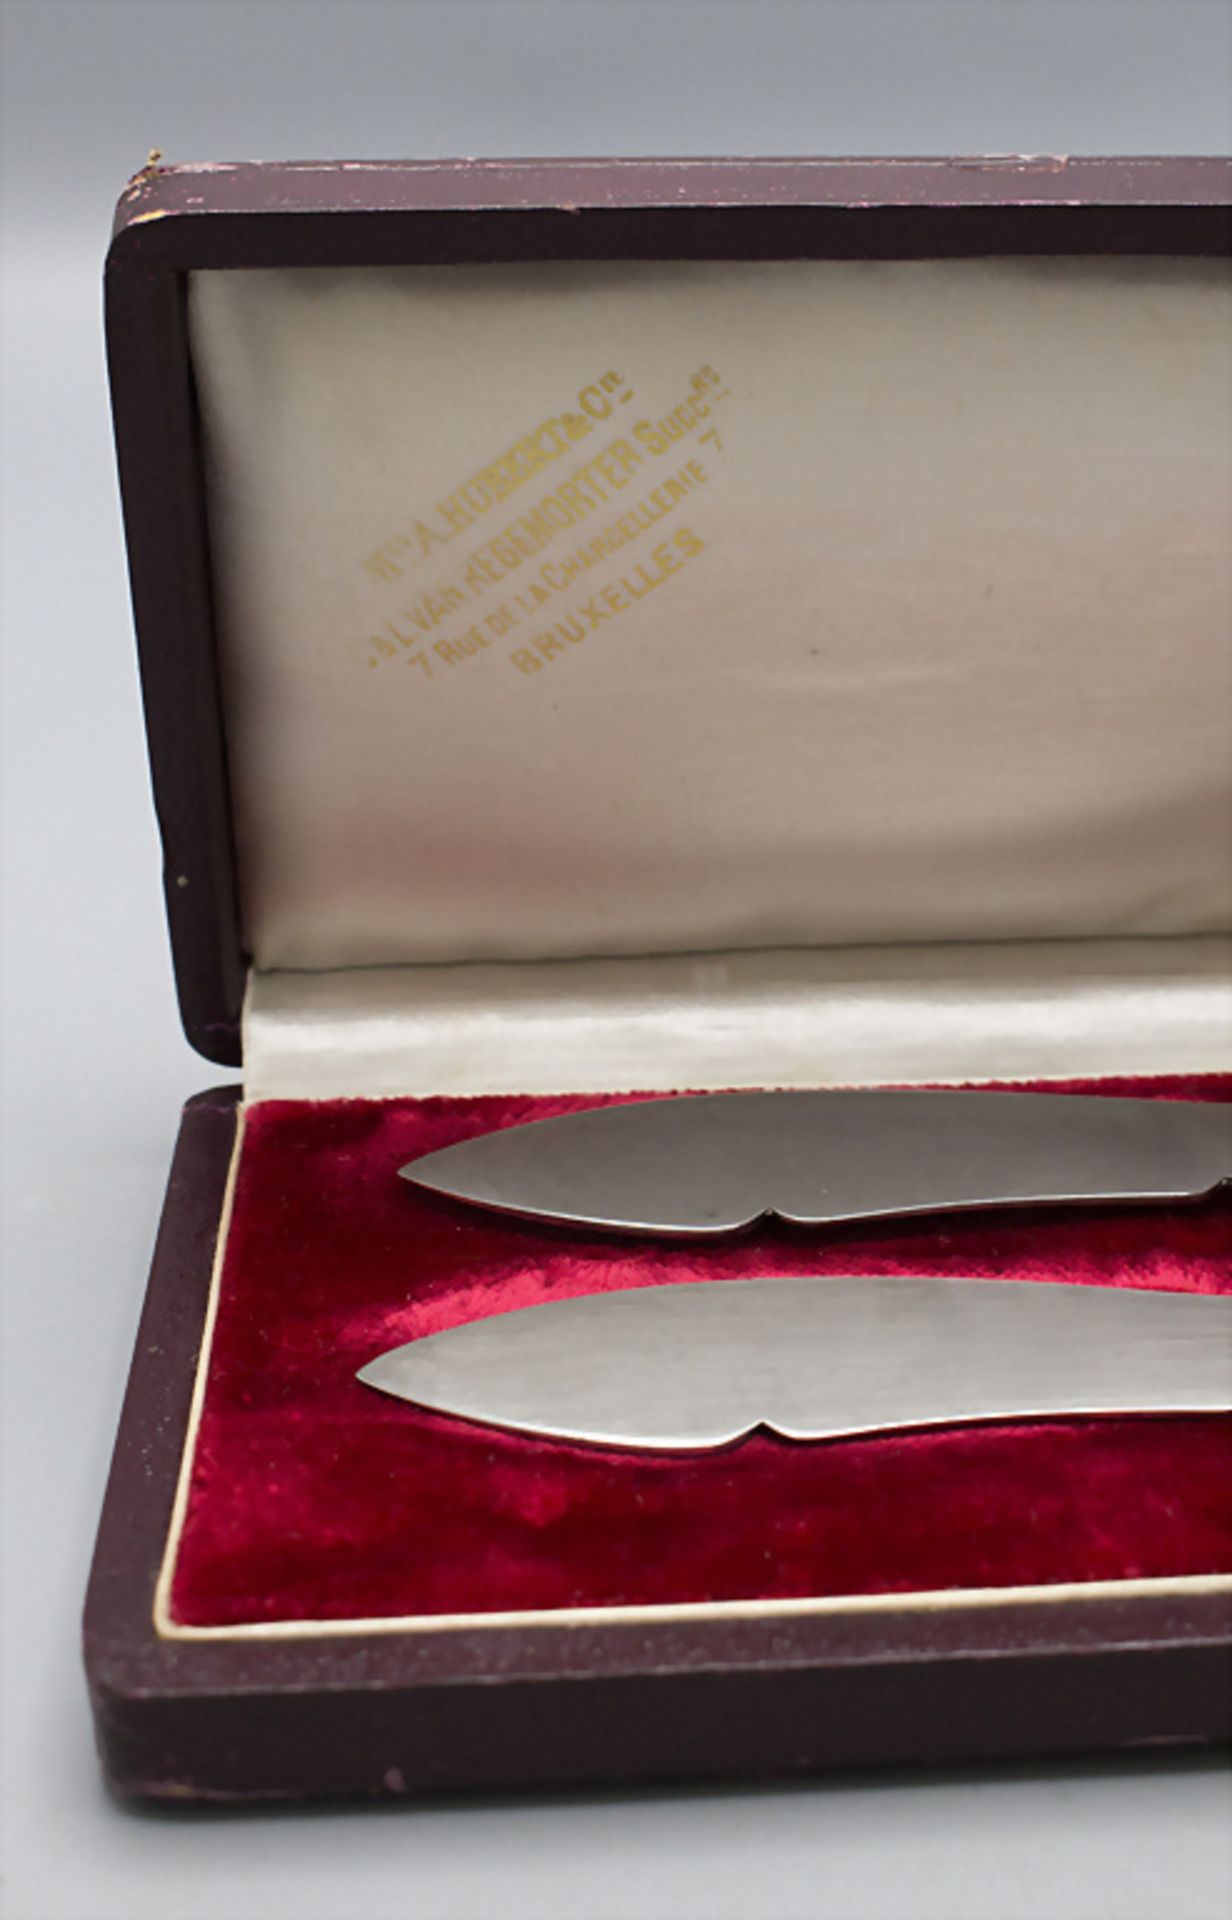 2 Käsemesser im Etui / 2 cheese knives in a box, Emile Puiforcat, Paris, um 1880 - Image 3 of 4